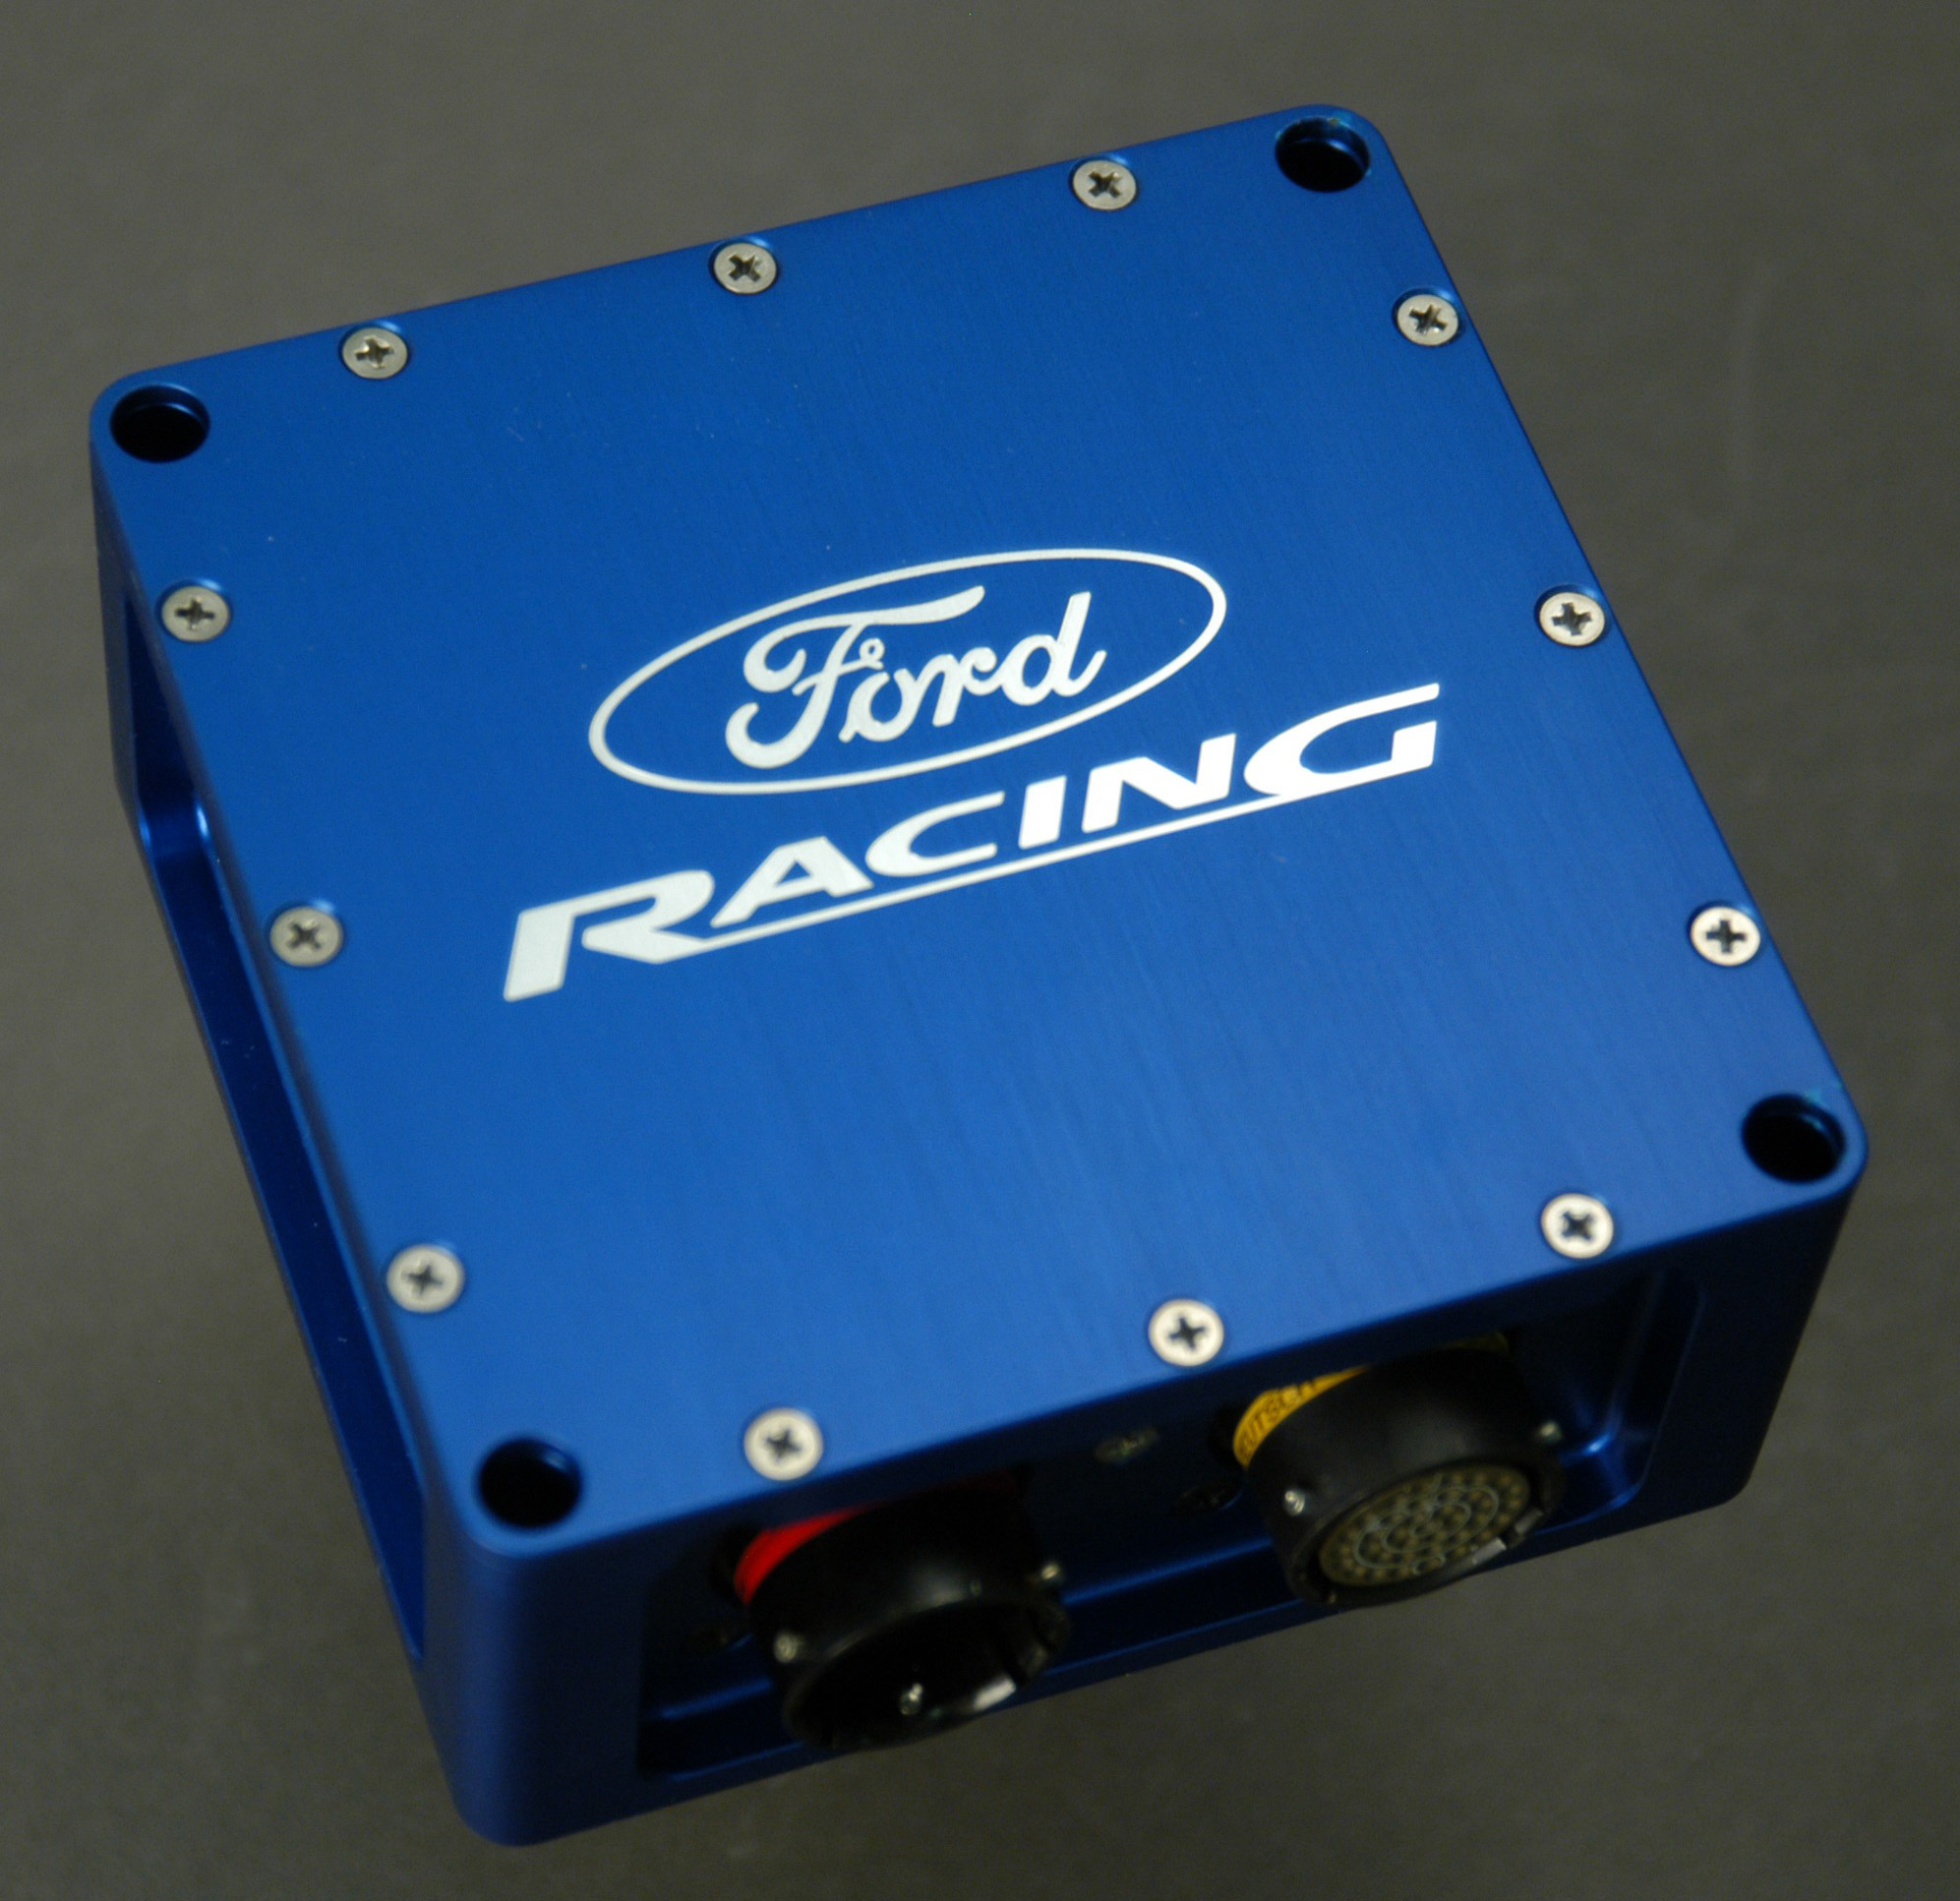 ford_racing_blue_box2.jpg